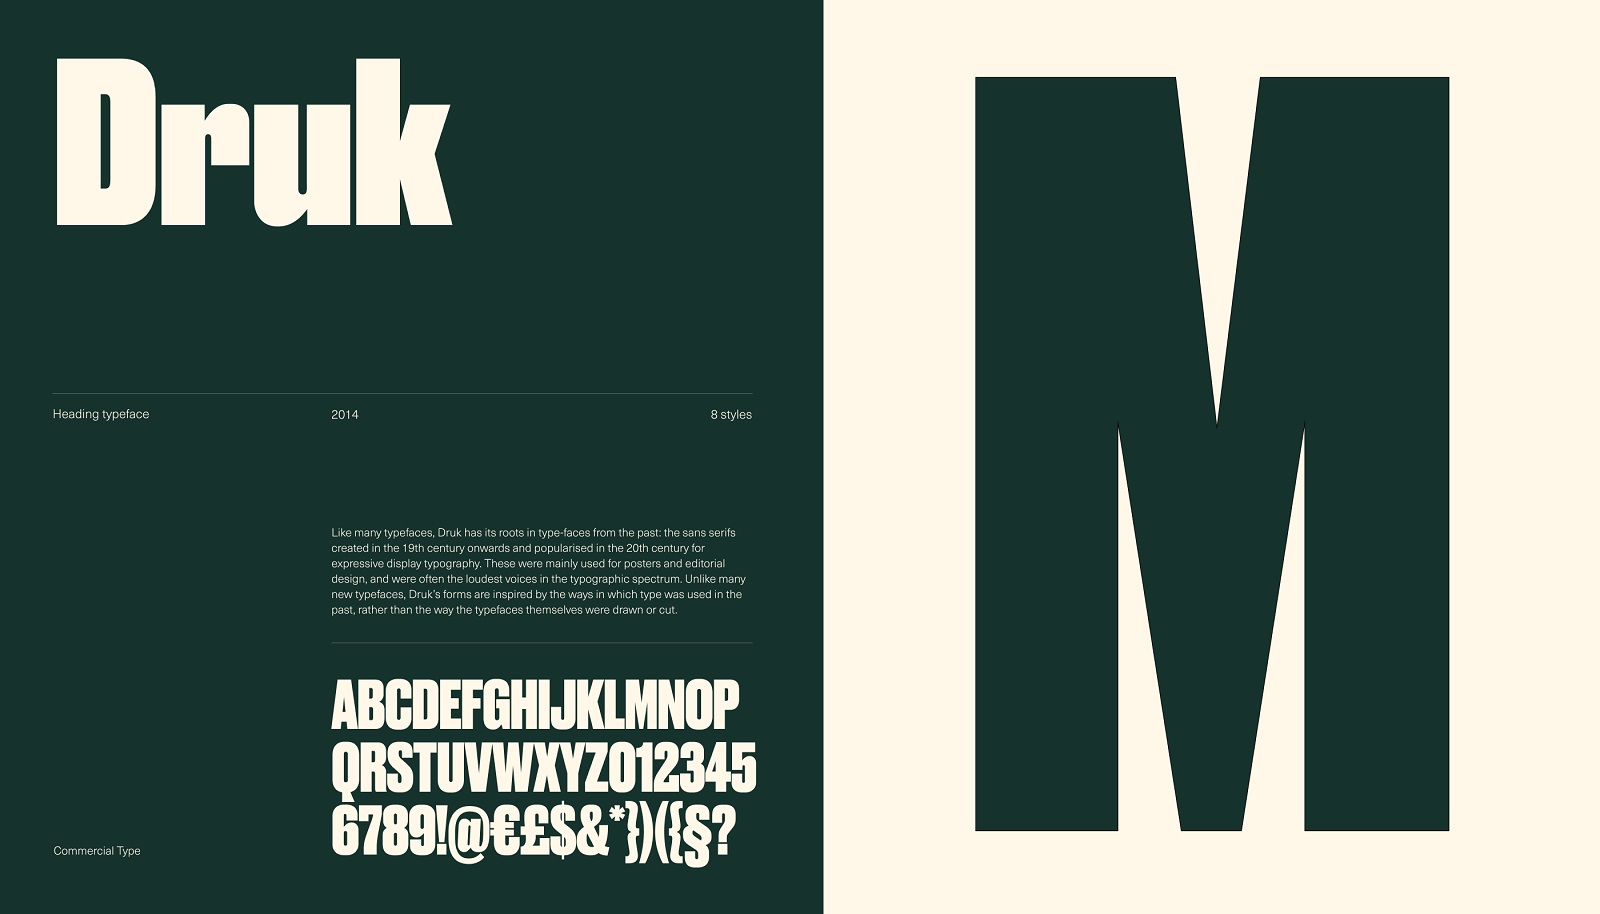 mova brewery website design case study tubik fonts